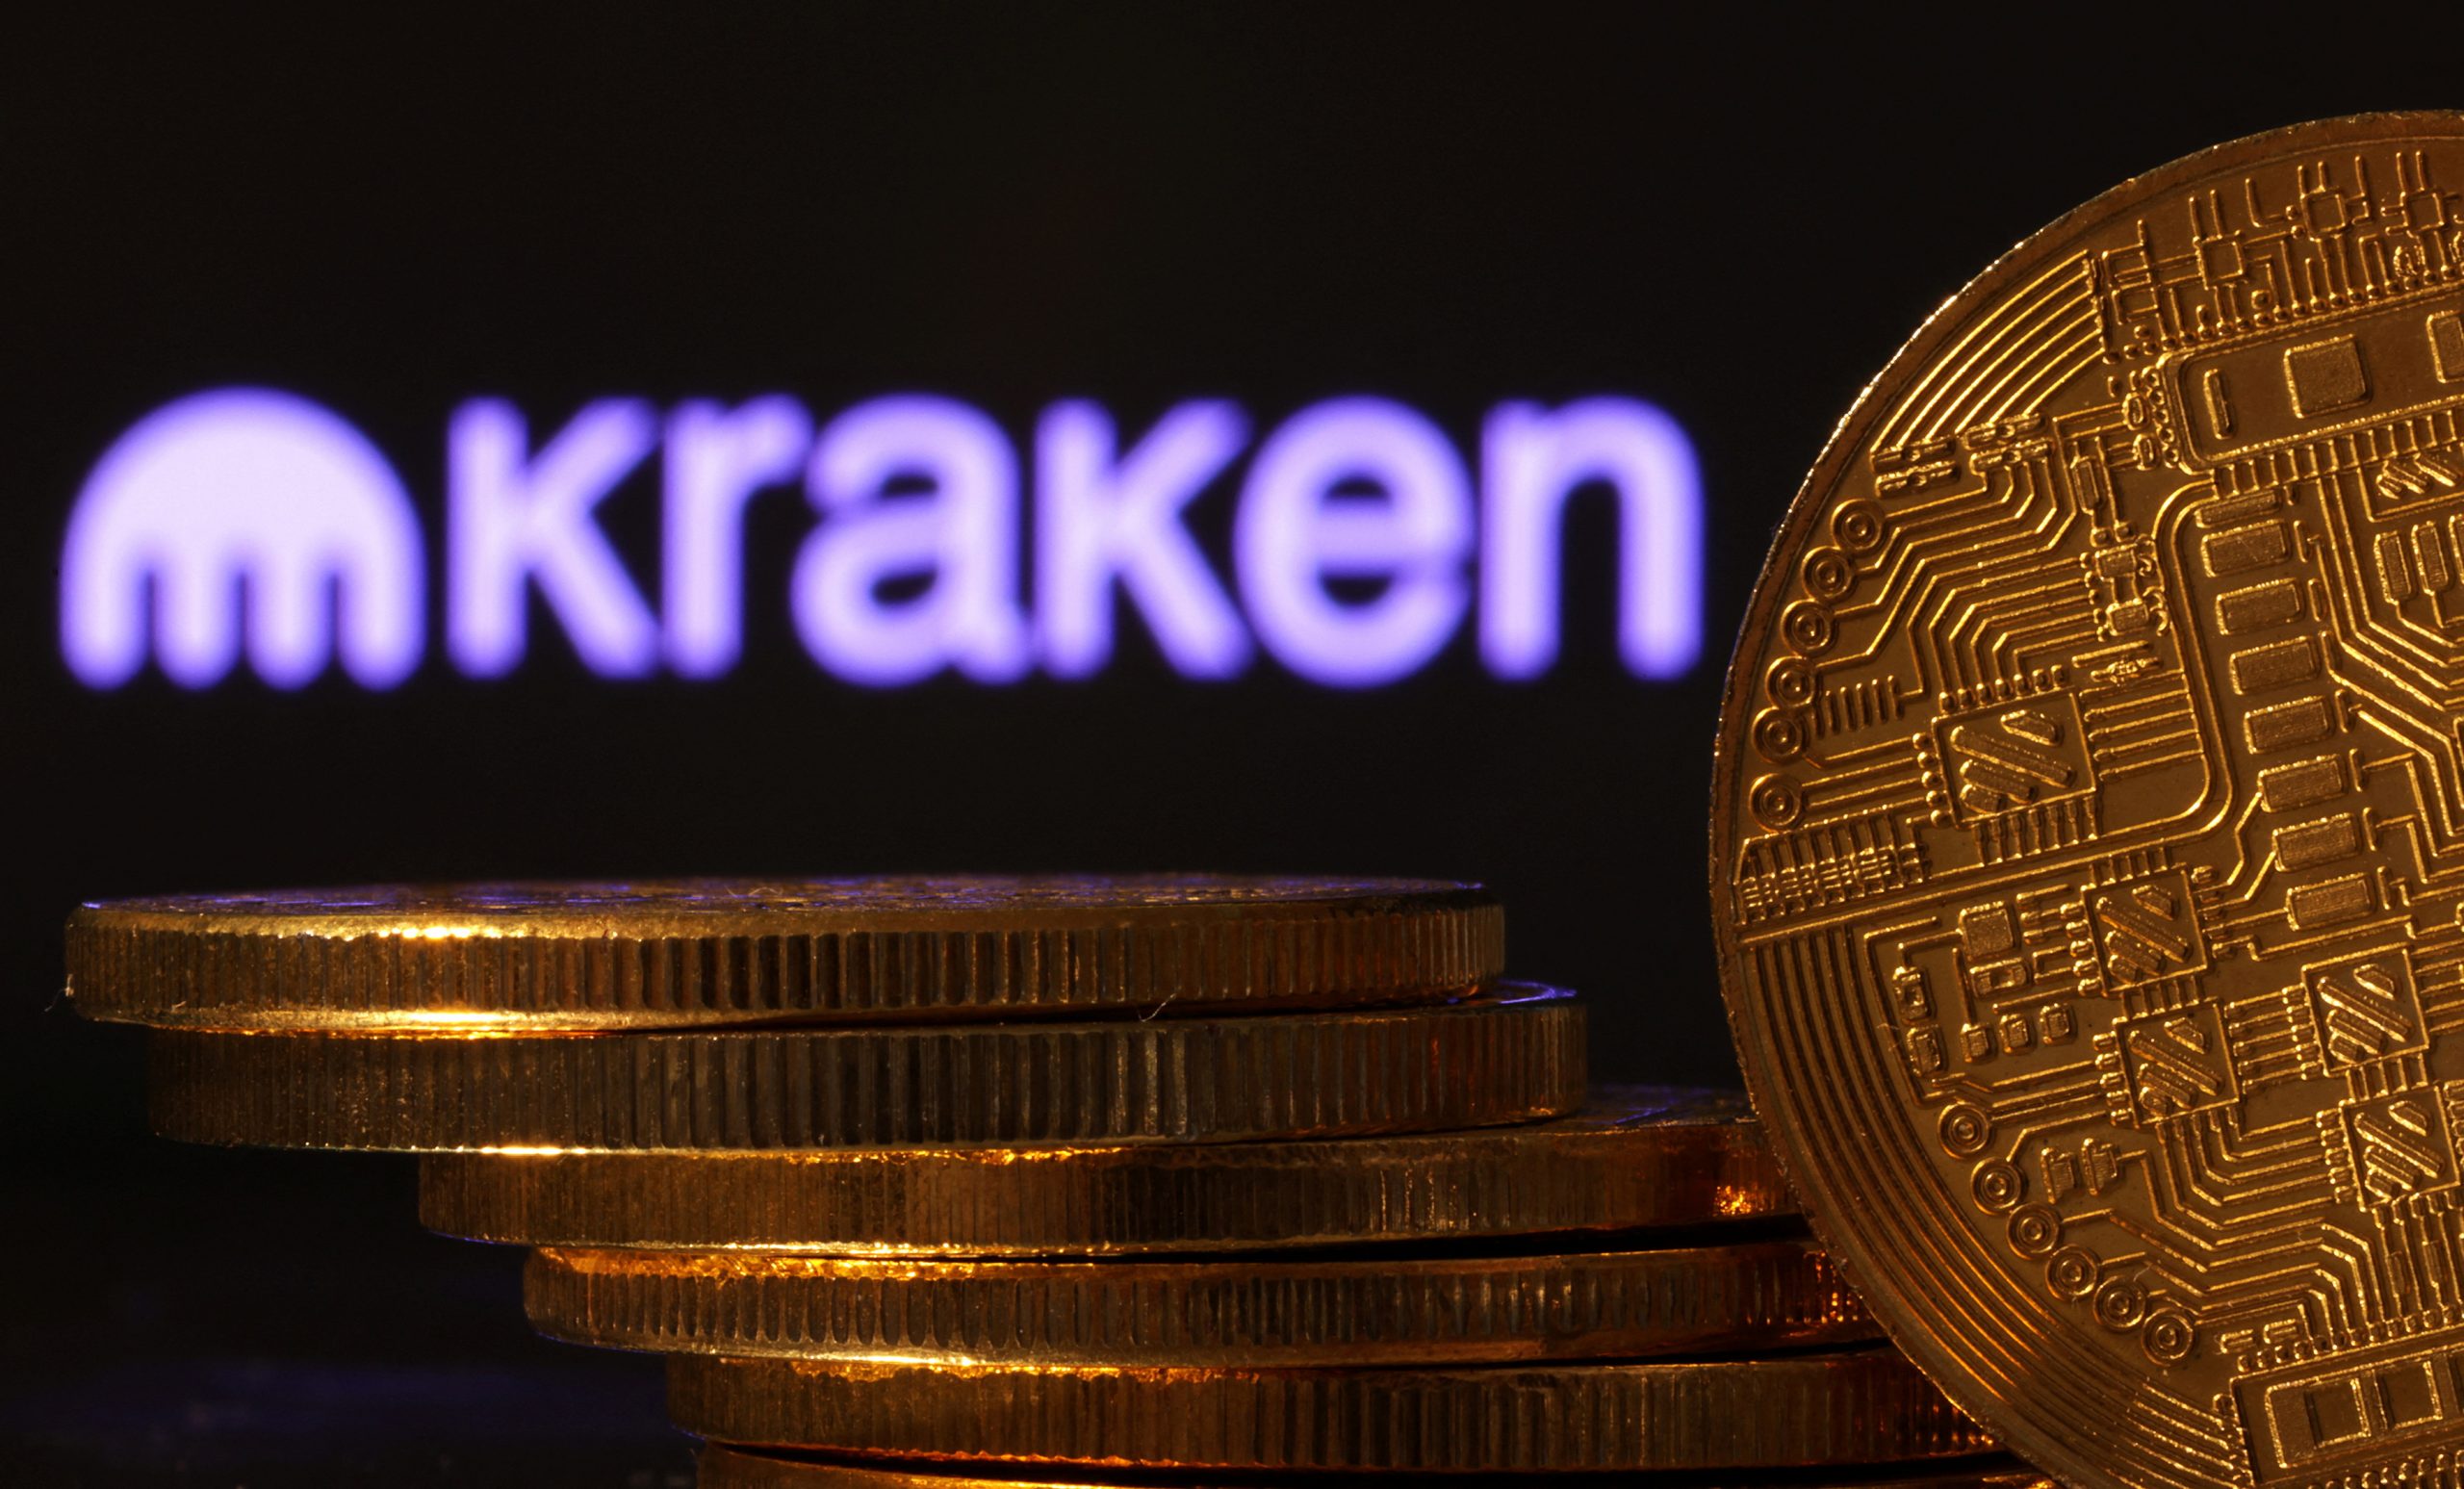 Illustration shows Kraken cryptocurrency exchange logo